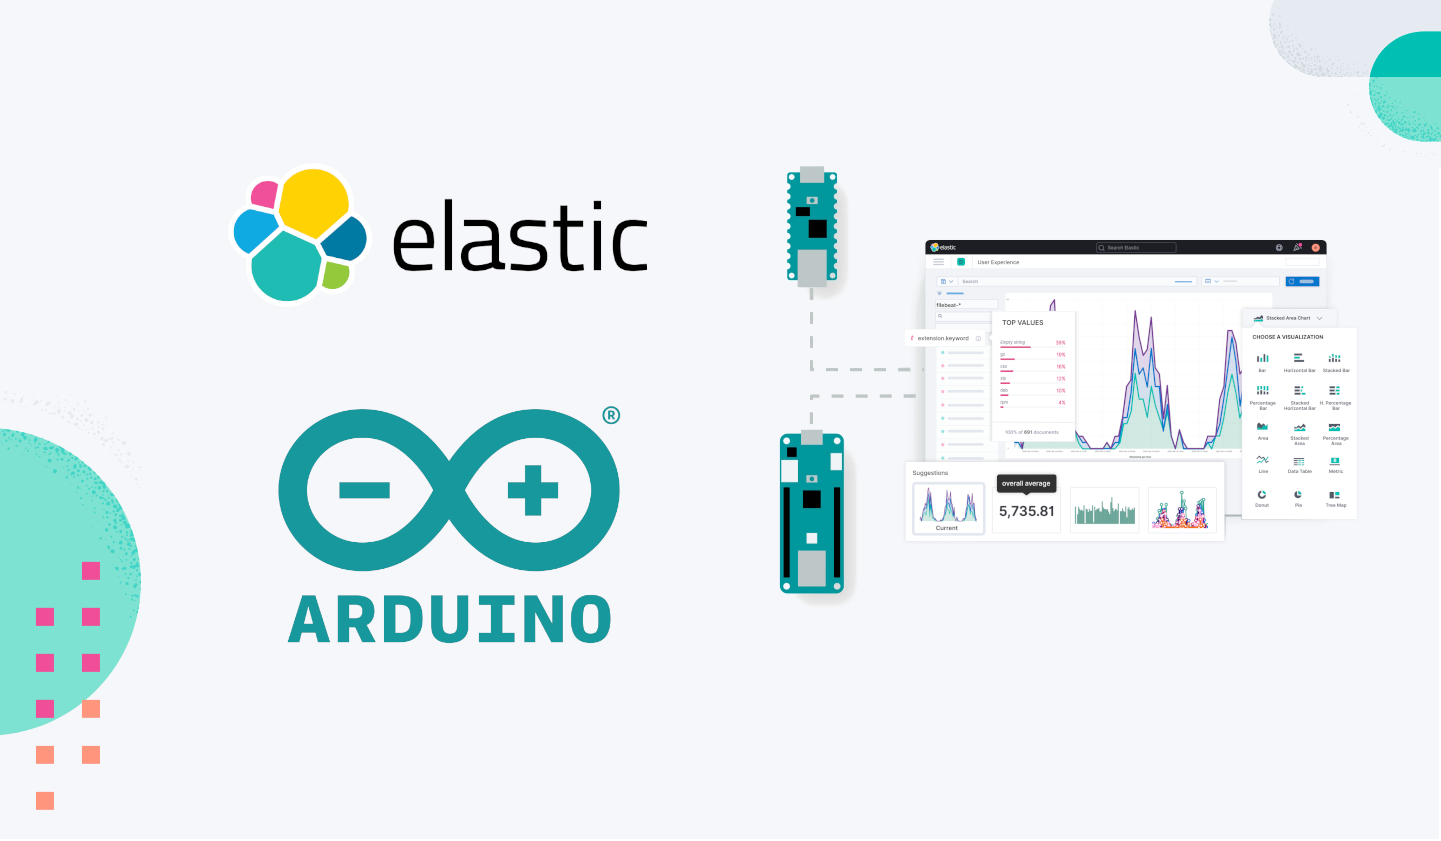 elastic-blog-header-image-arduino.png